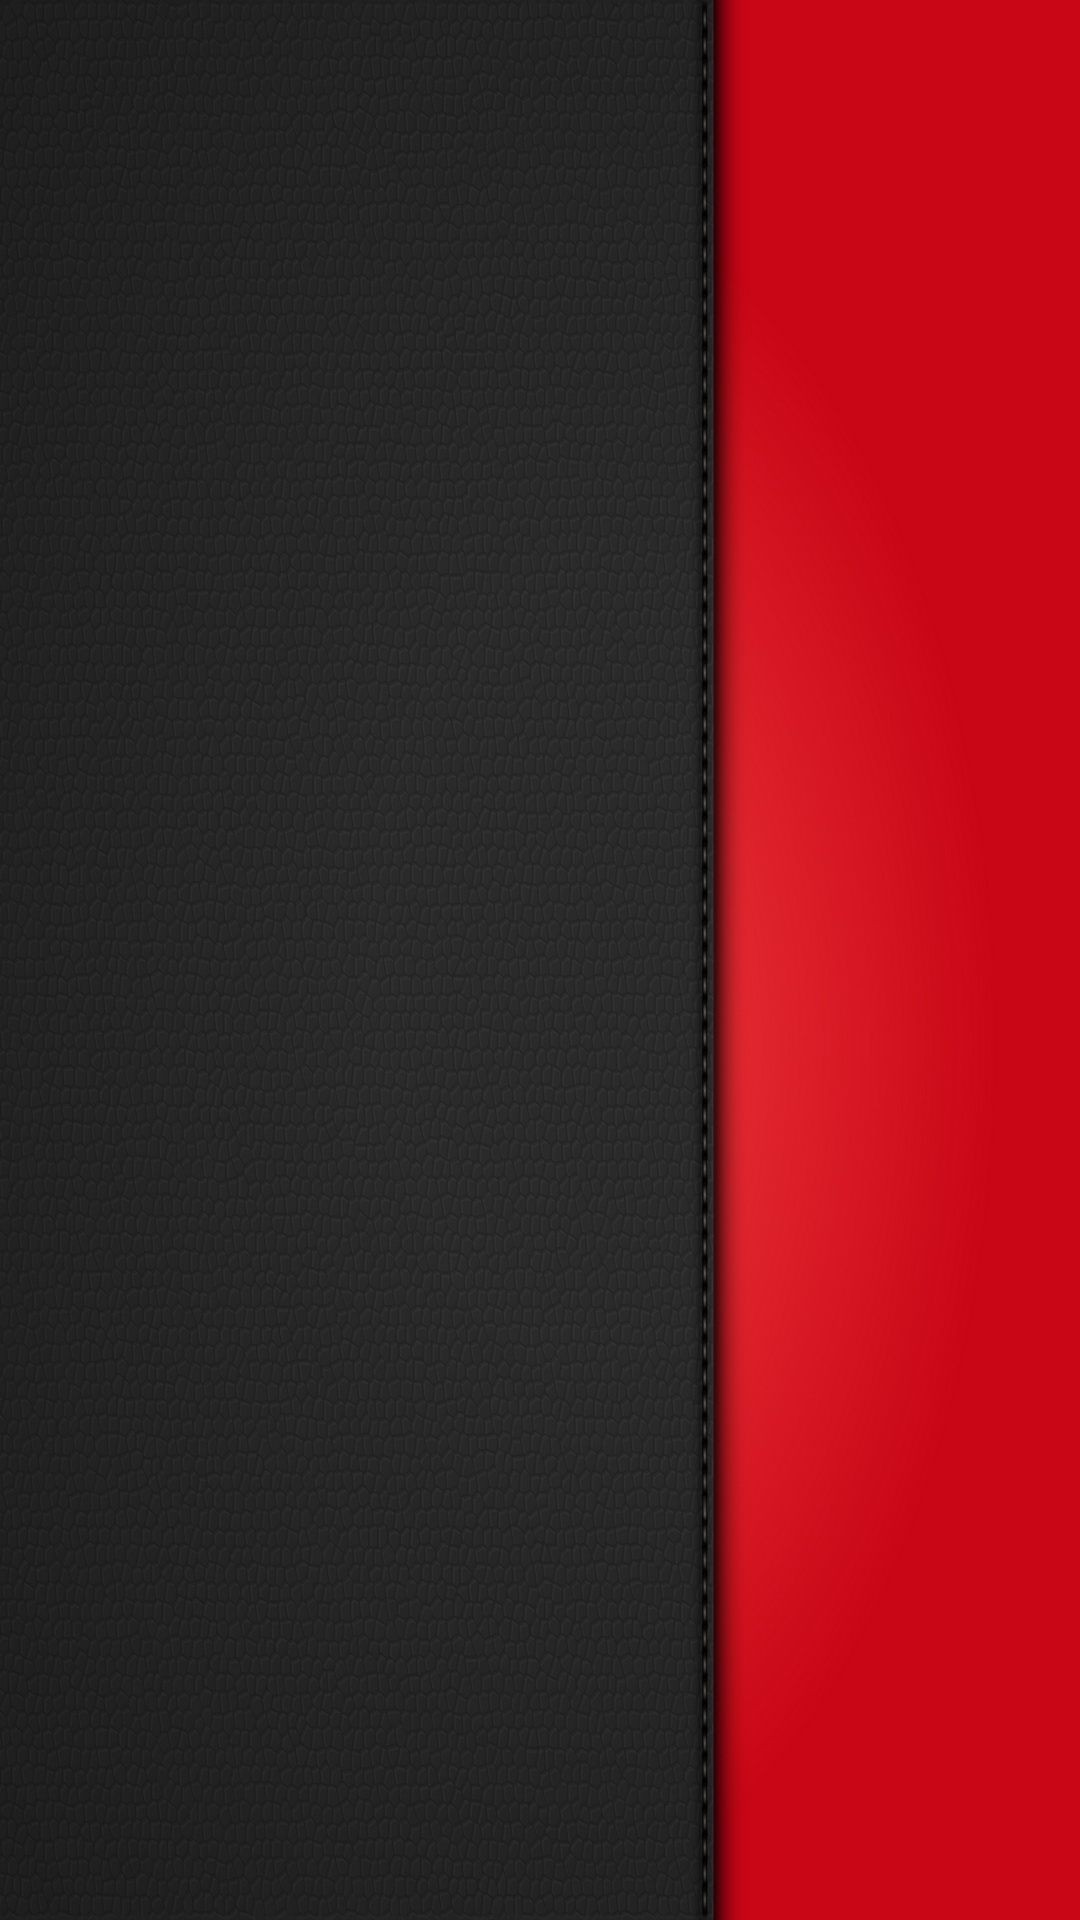 black wallpaper iphone 6 plus,red,black,maroon,brown,material property